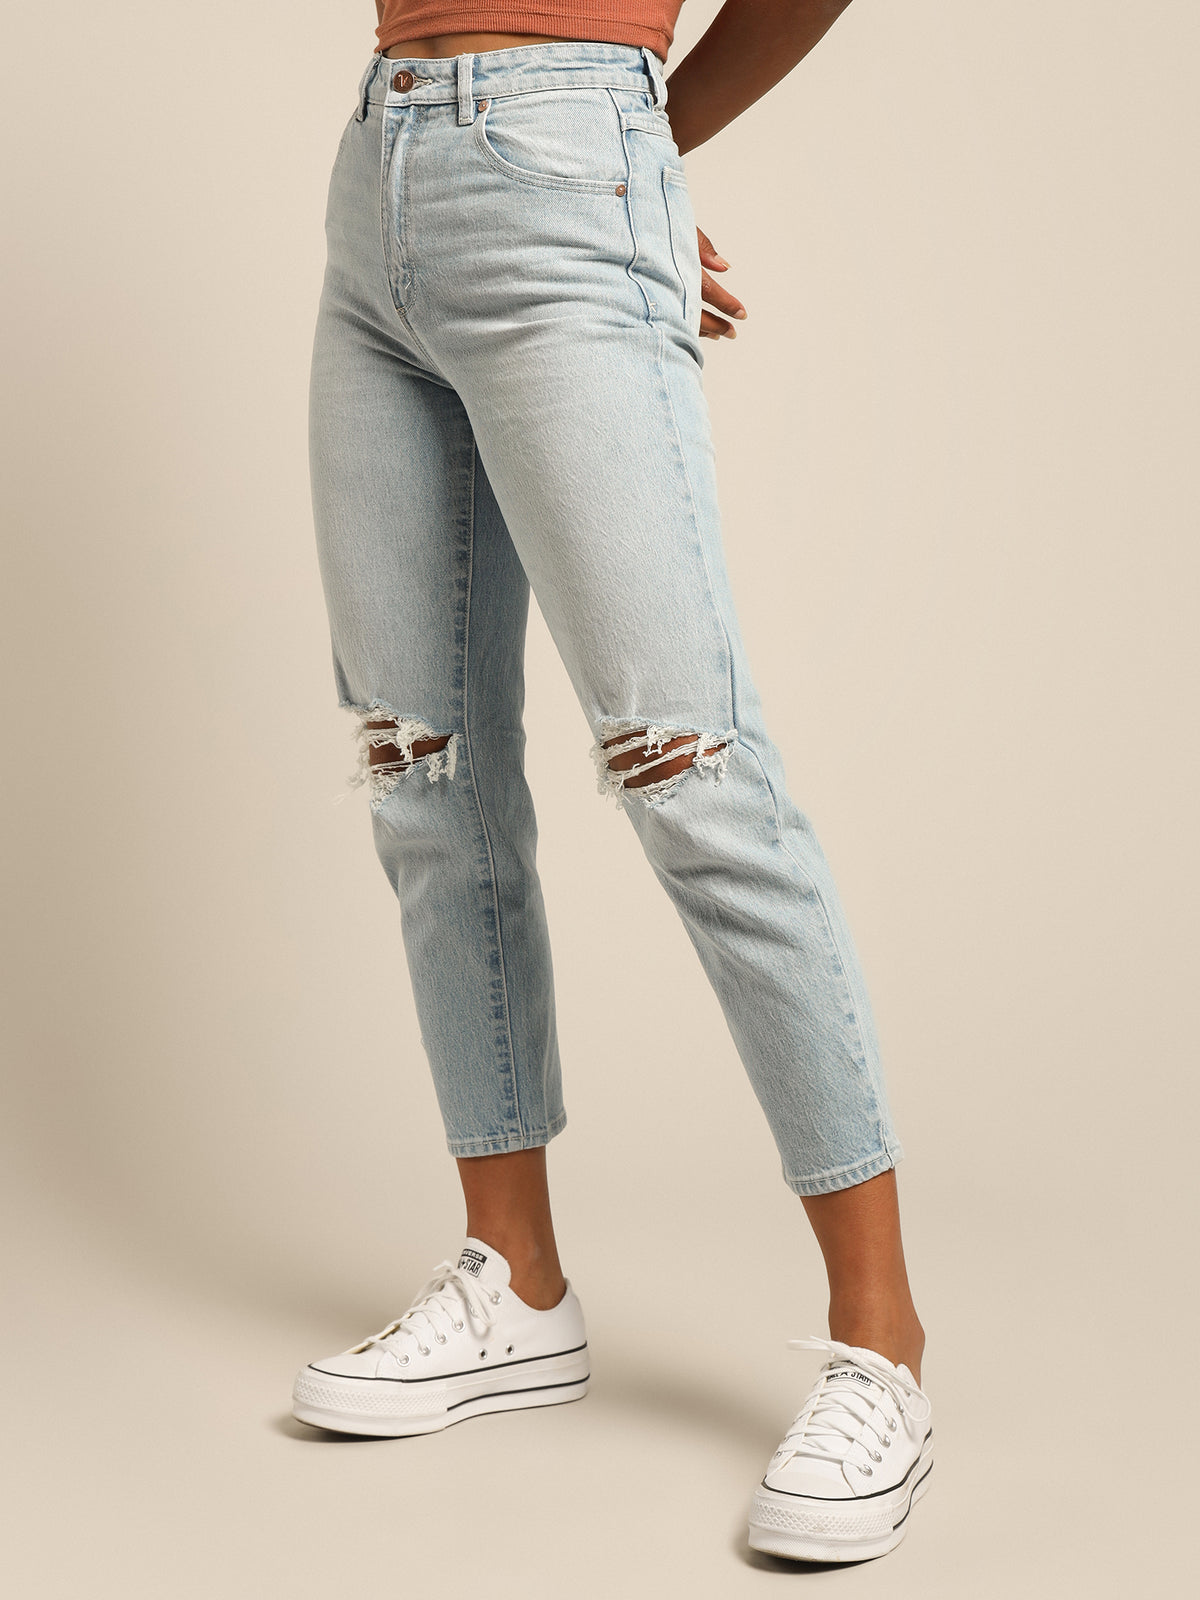 A 94 High Slim Jeans in Gina Rip